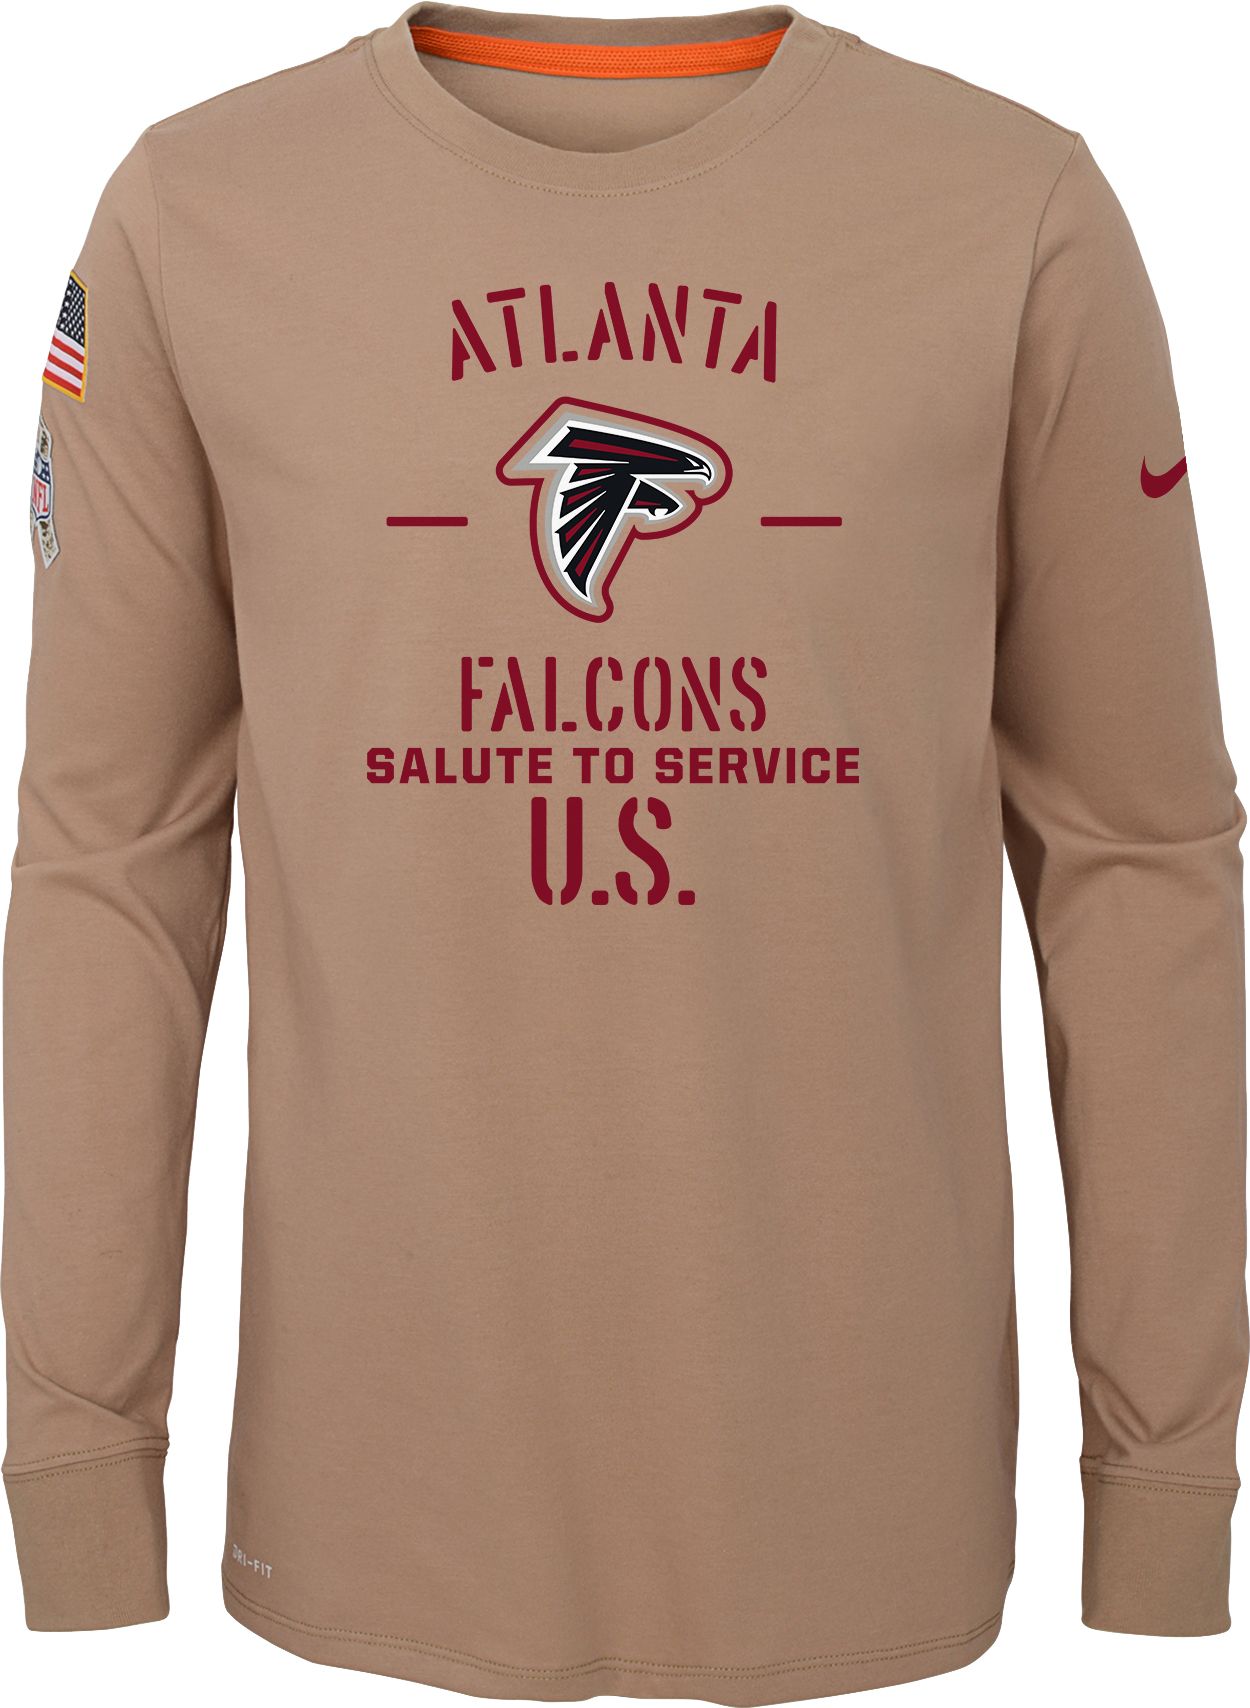 falcons long sleeve shirt